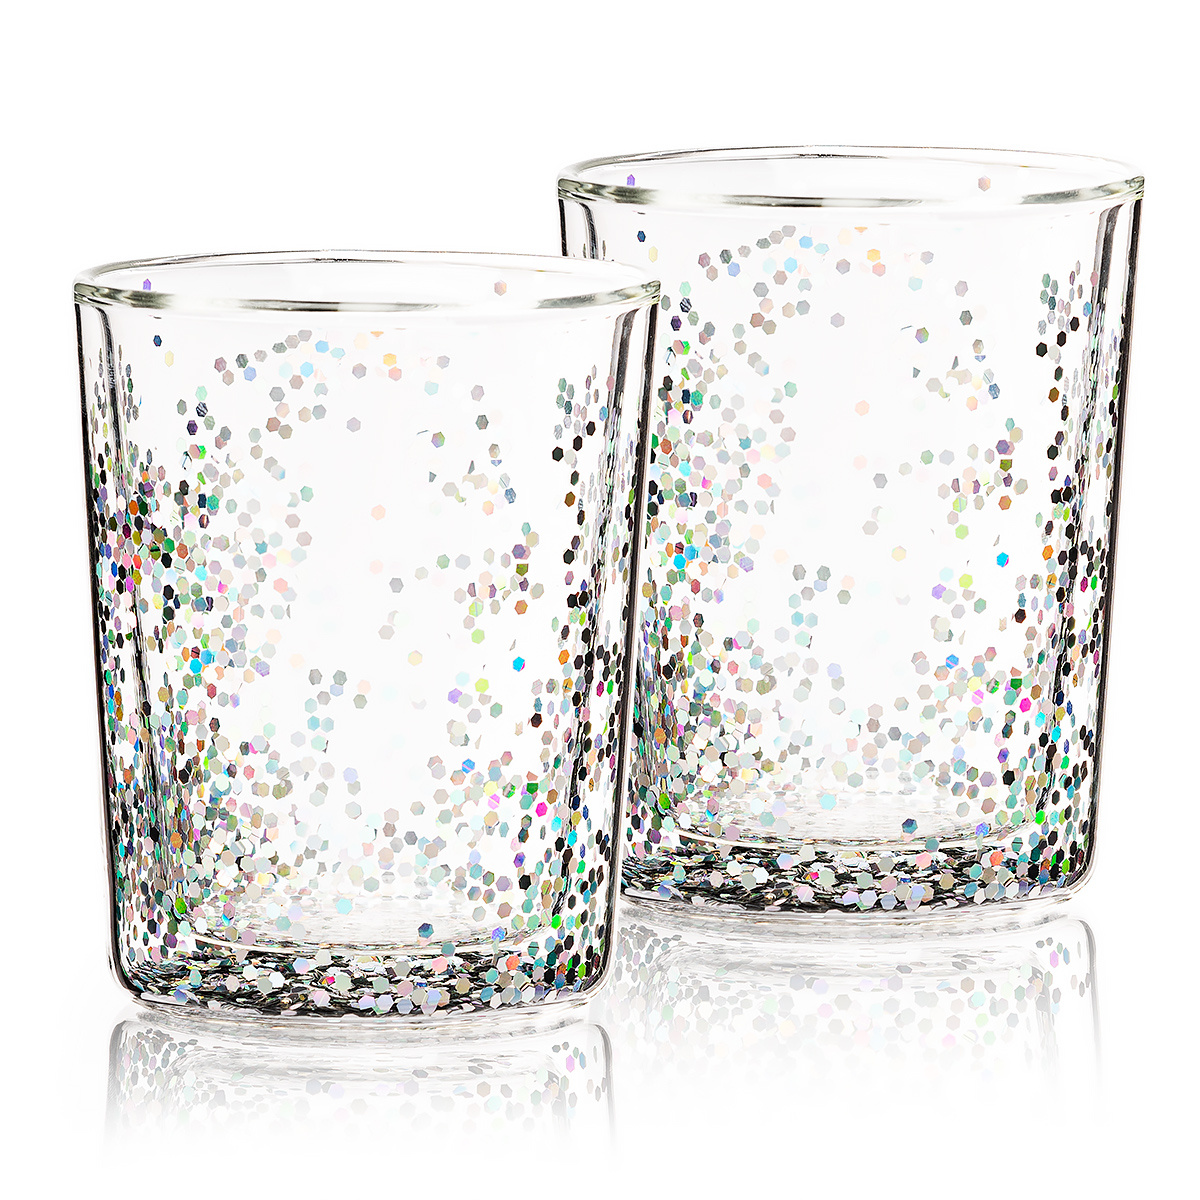 4Home Termo sklenice HotnCool Sparkle 250 ml, 2 ks